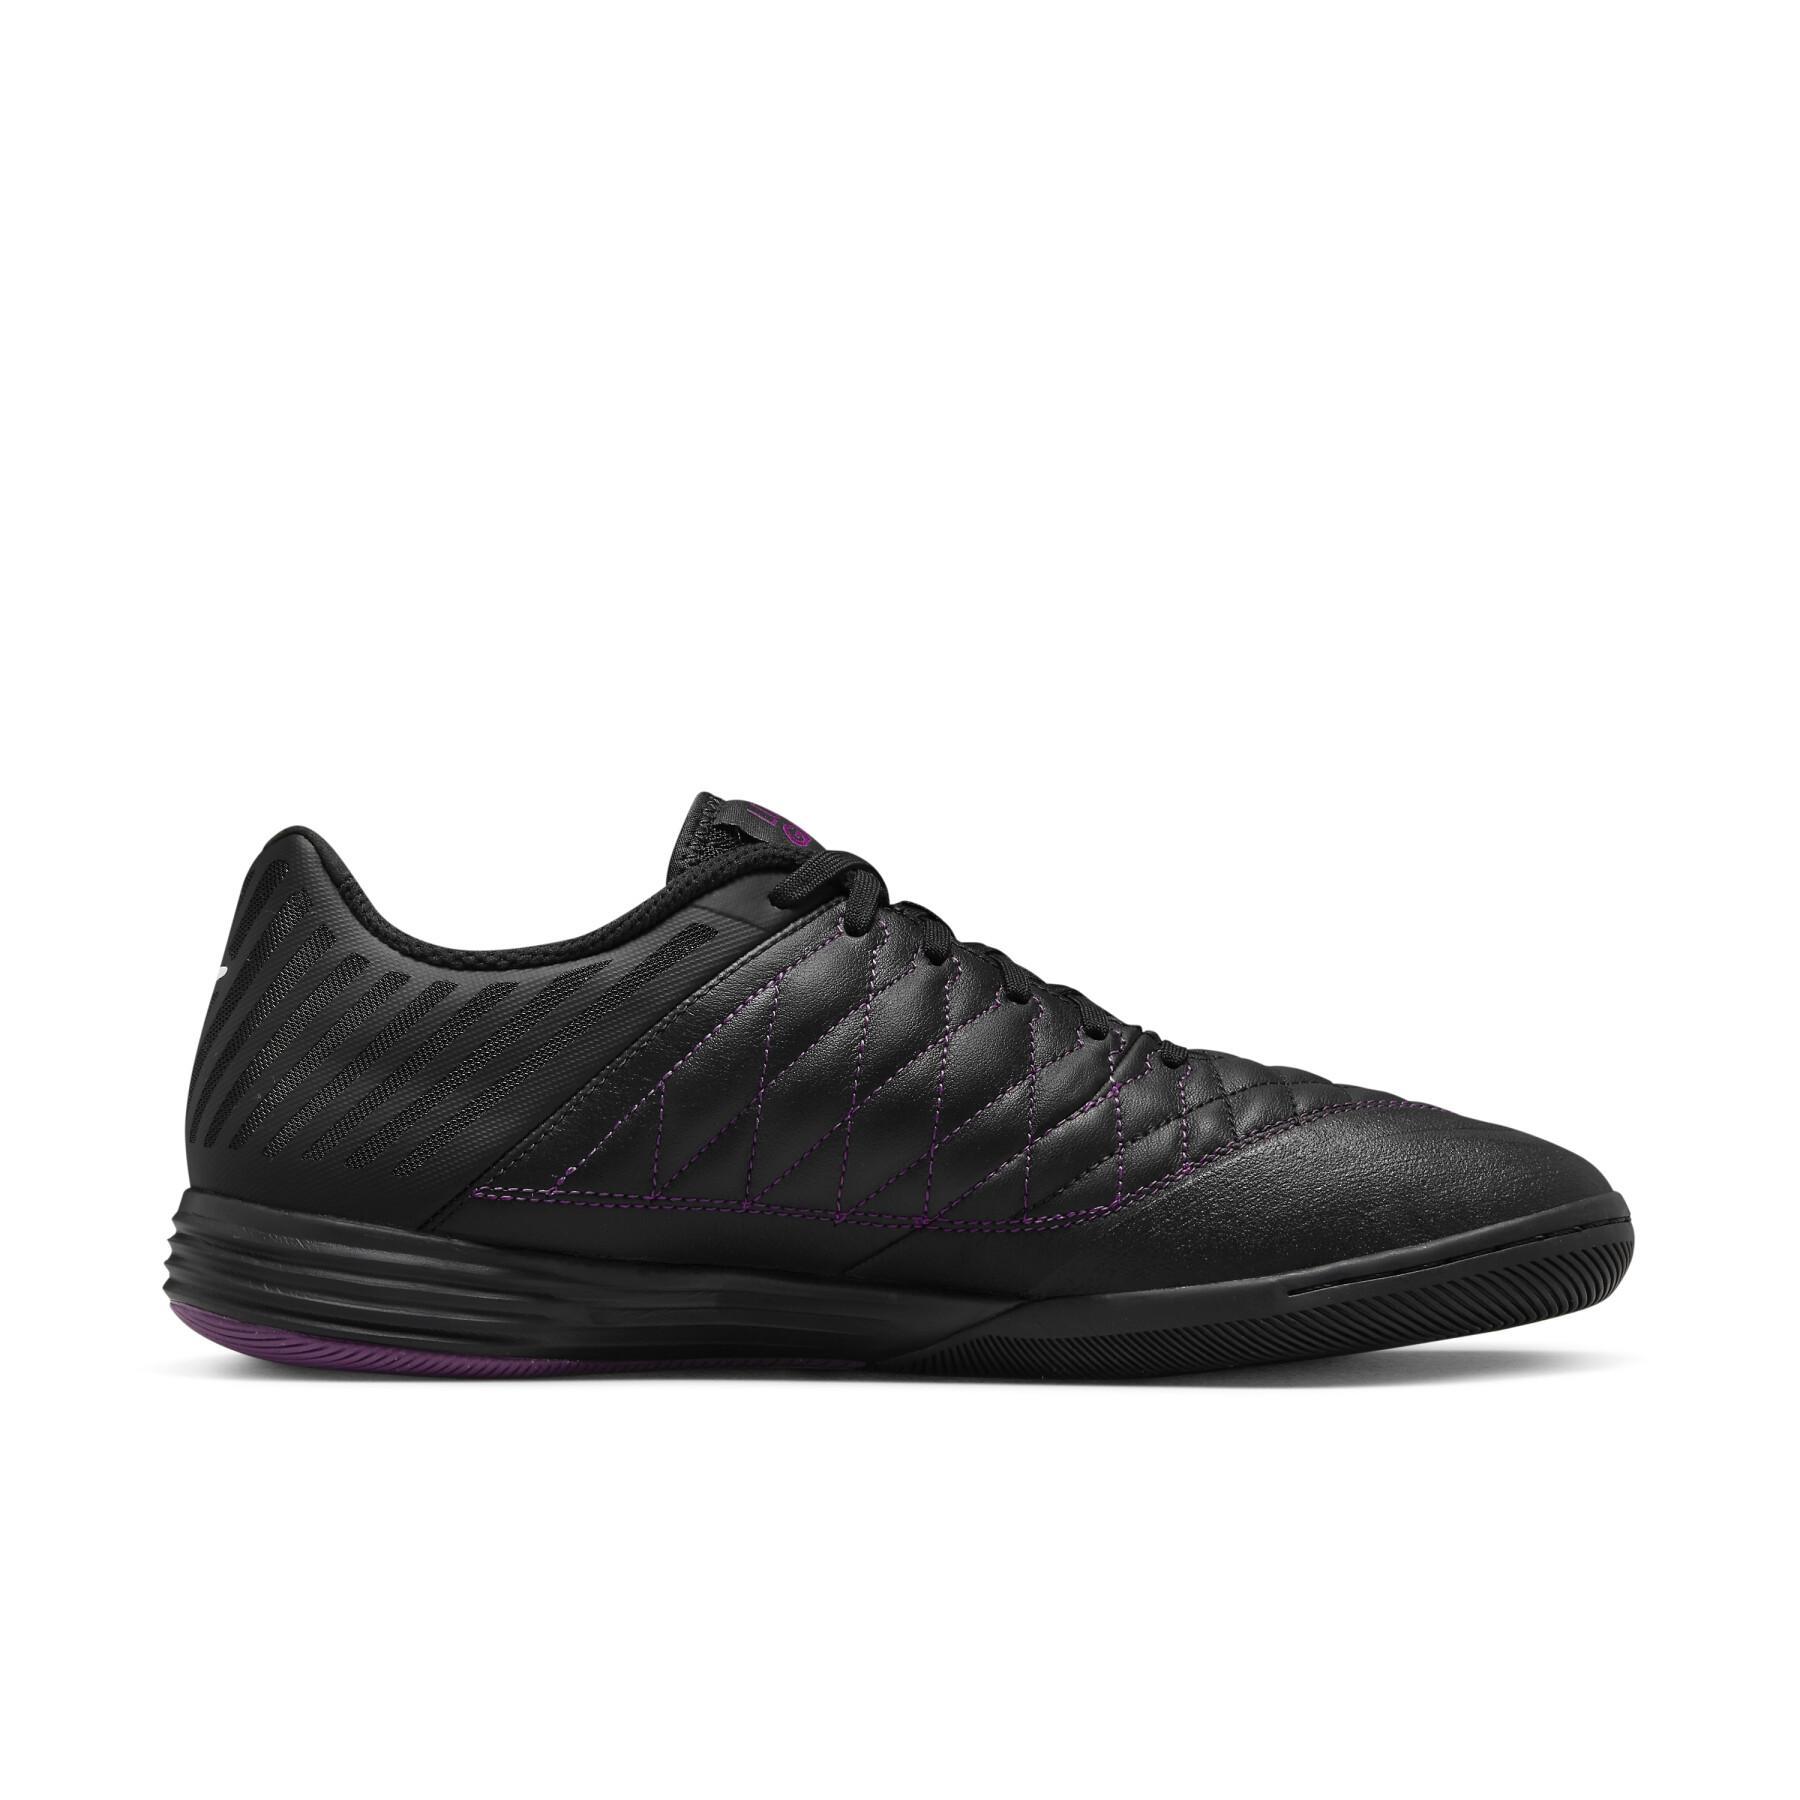 Soccer shoes Nike Lunar Gato II IC